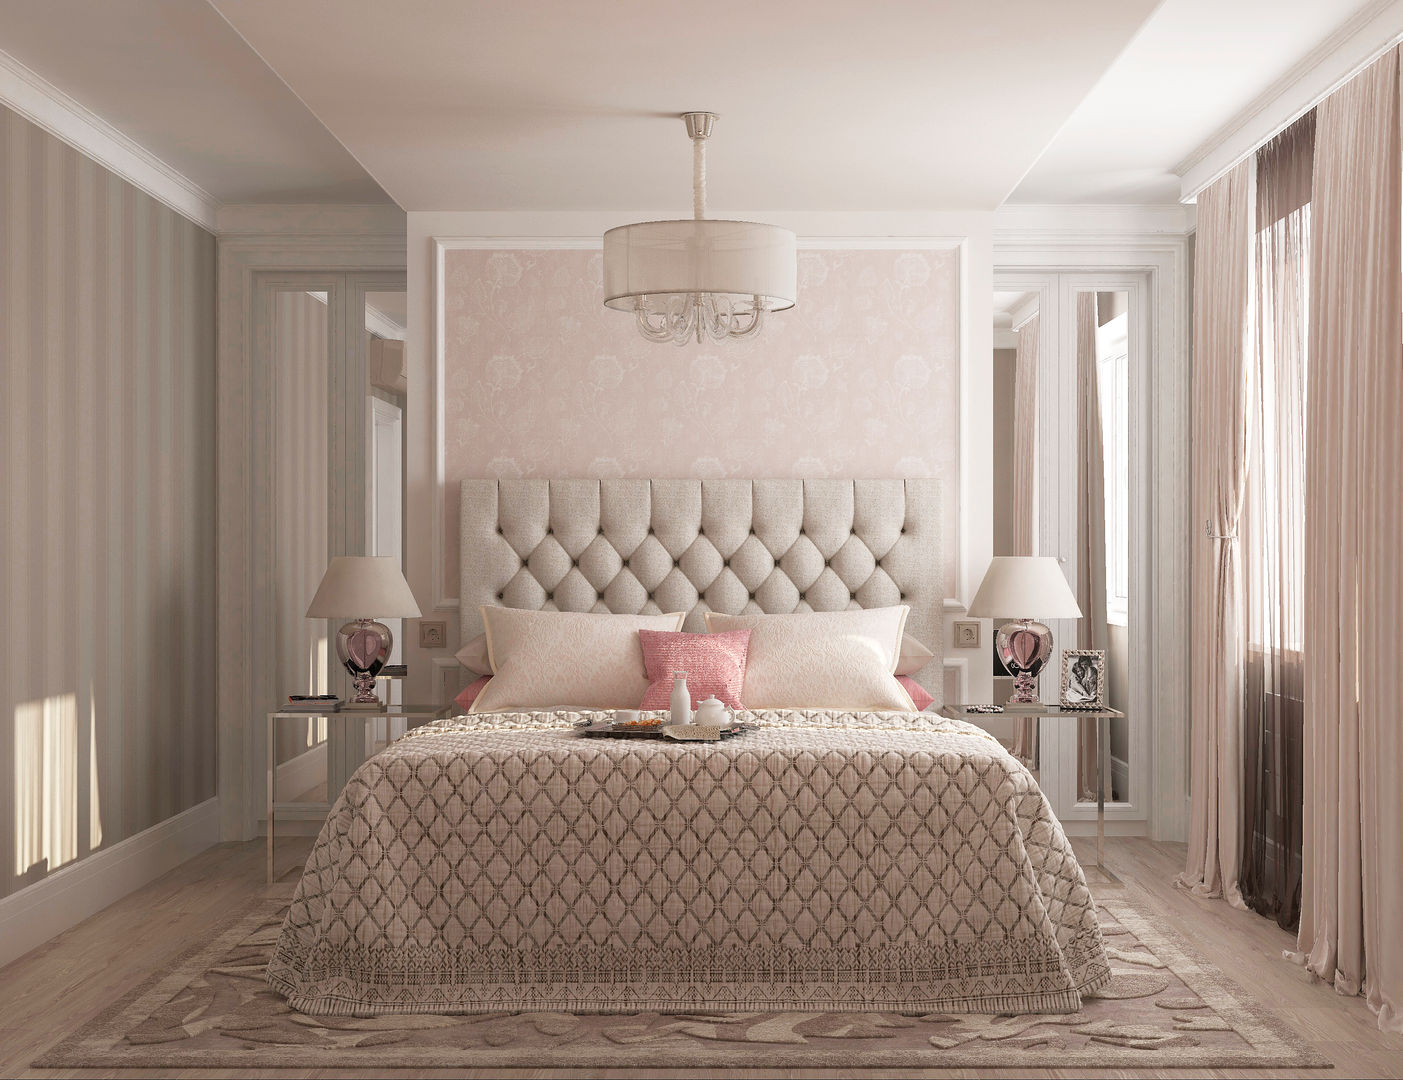 Спальня гостевая "Glamour", Студия дизайна Дарьи Одарюк Студия дизайна Дарьи Одарюк Kamar Tidur Klasik